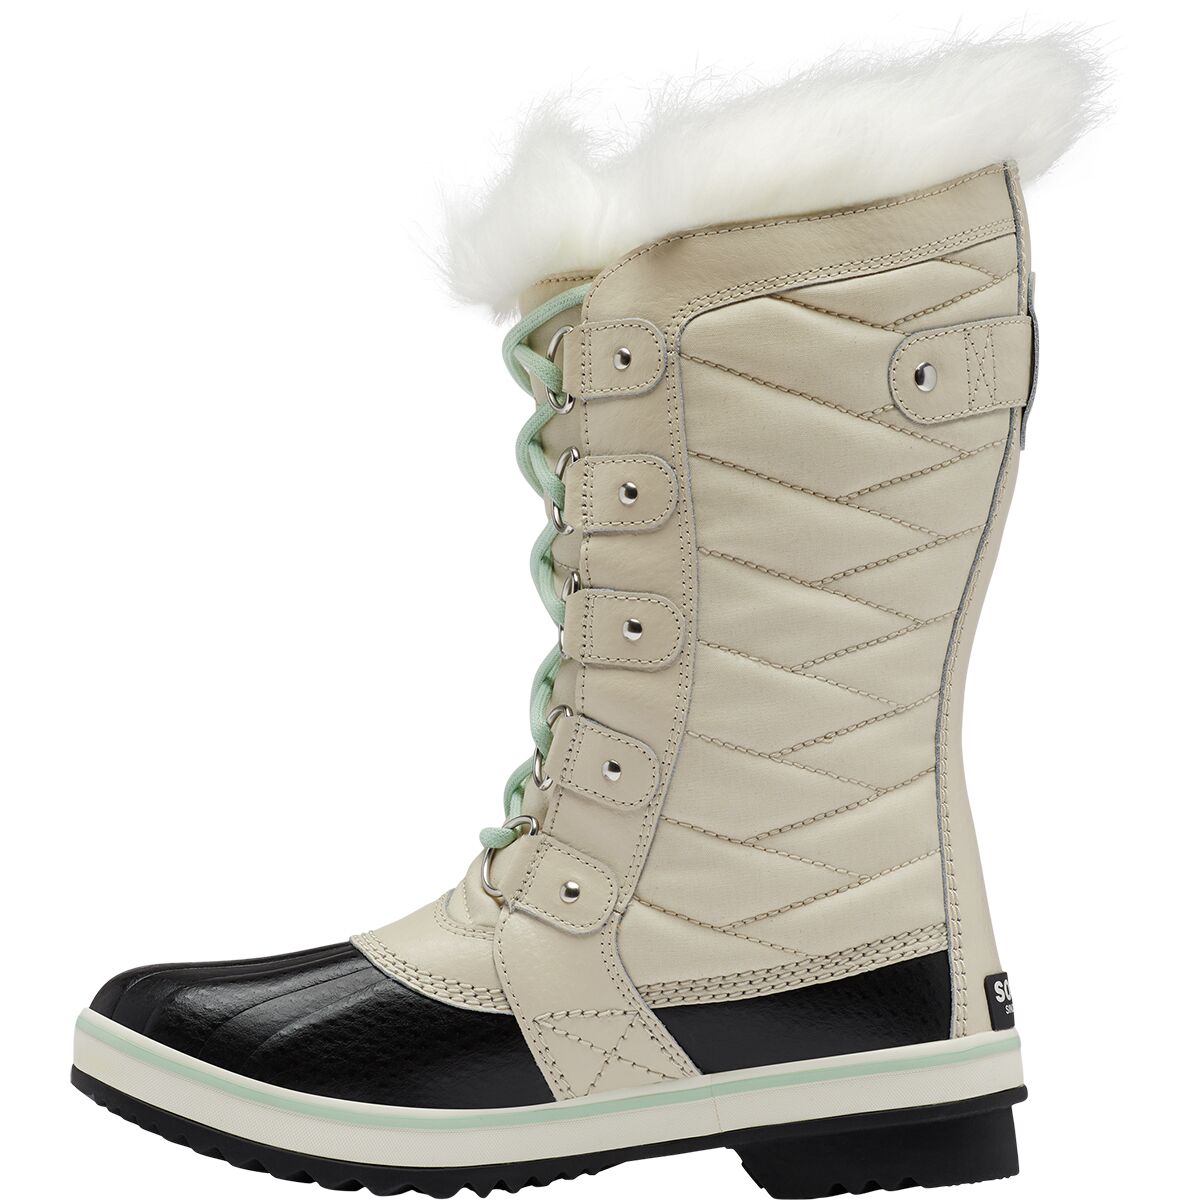 SOREL Tofino II Boot - Women's - Footwear